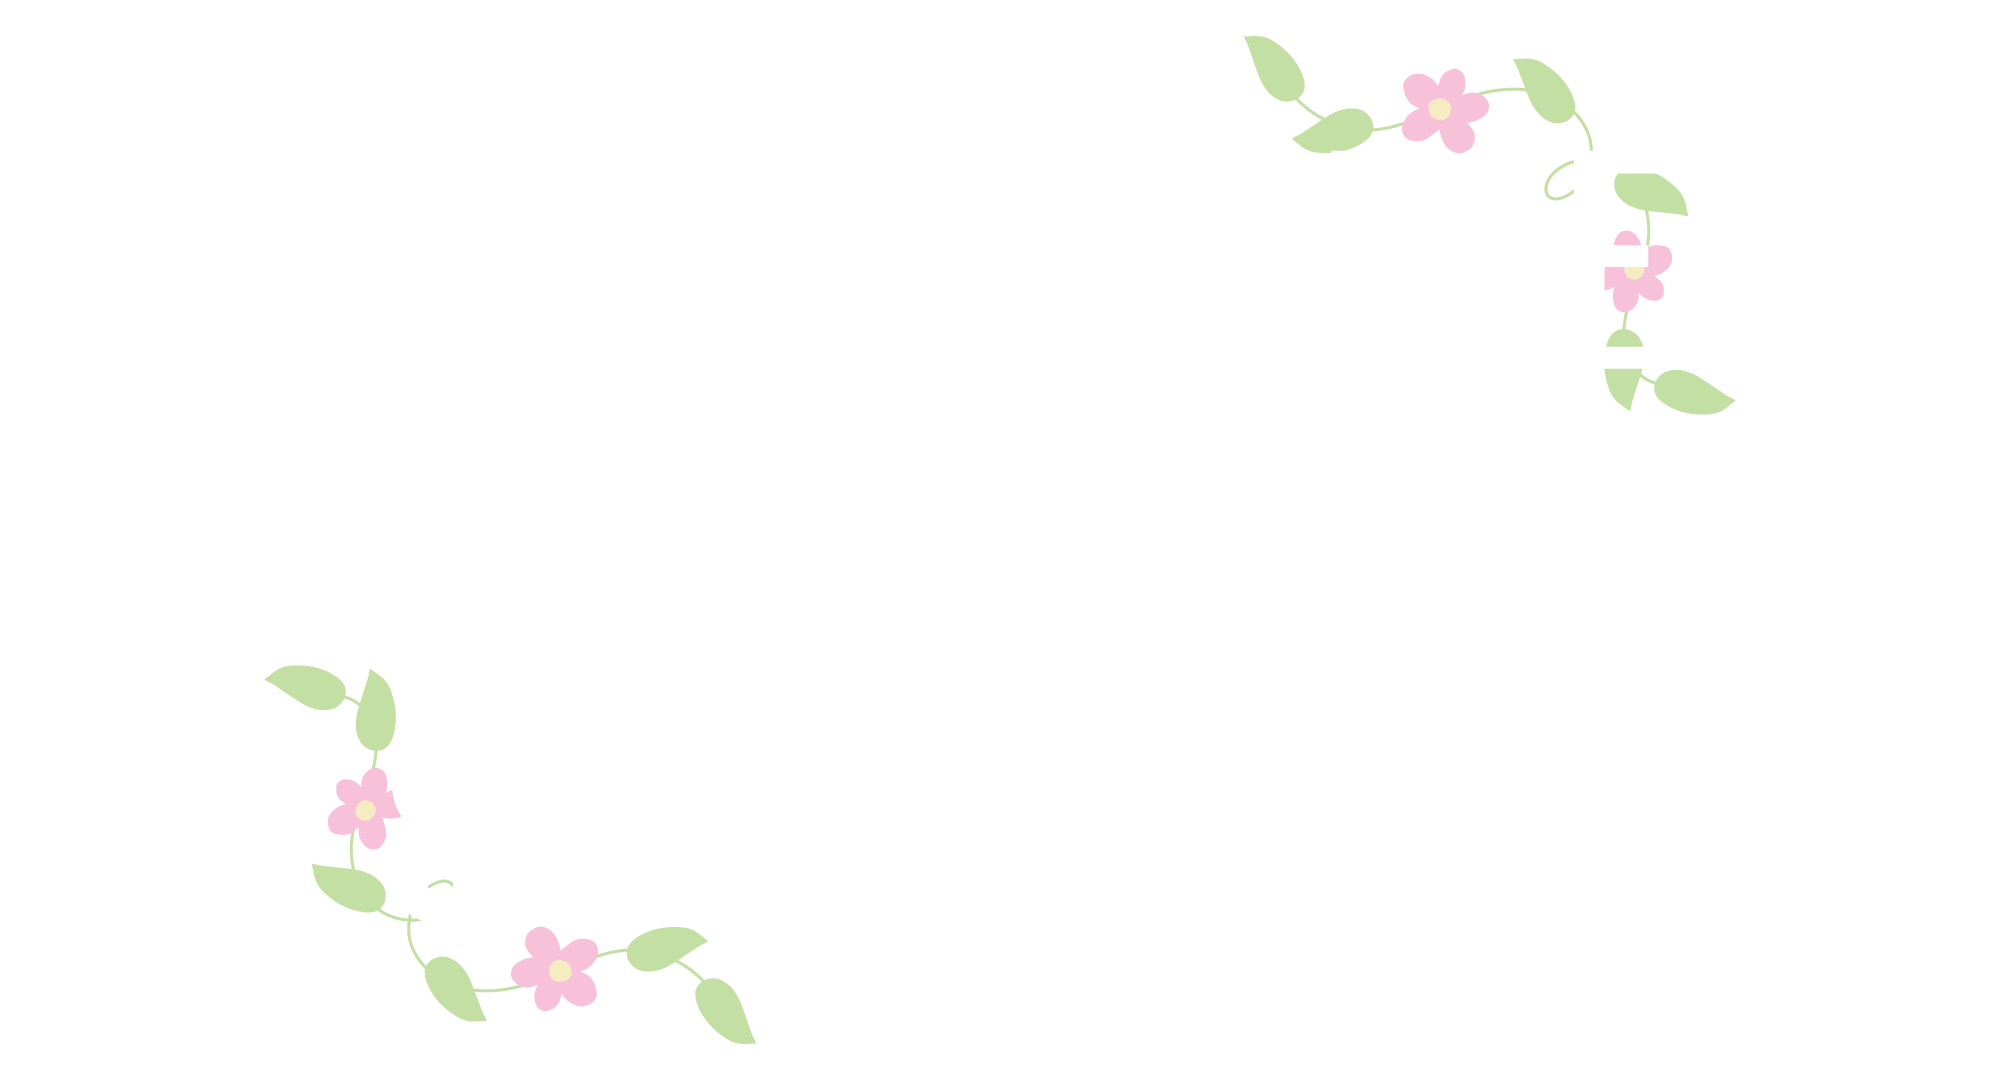 Spring Time Savings Spectacular Sale Logo